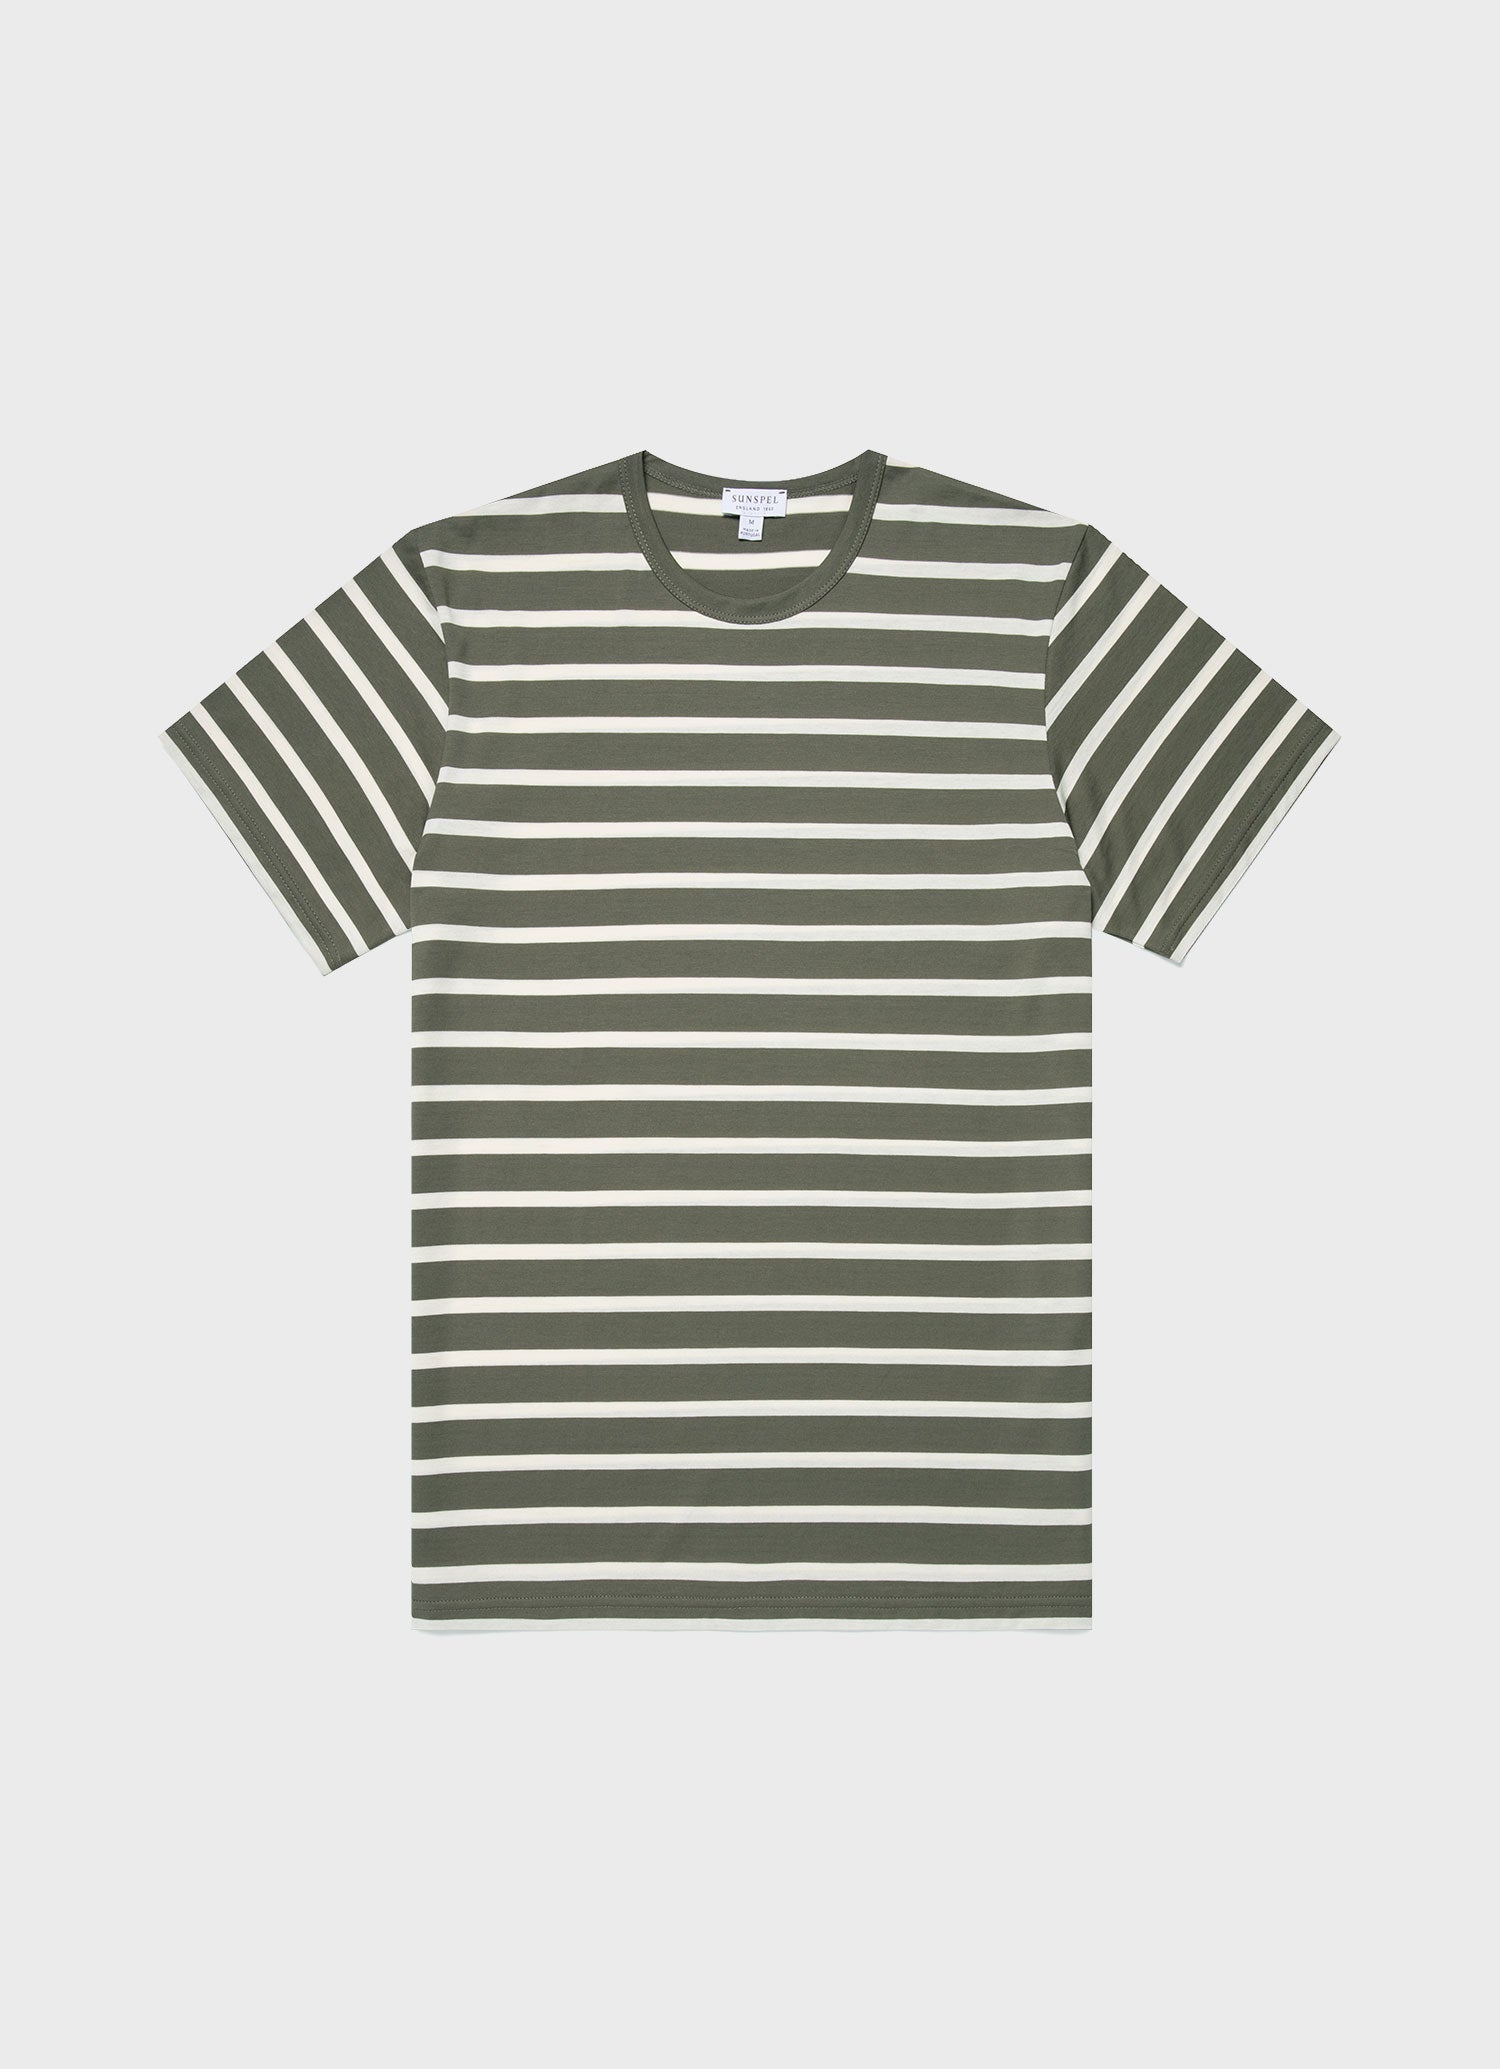 Men's Classic T-shirt in Khaki/Ecru Breton Stripe | Sunspel